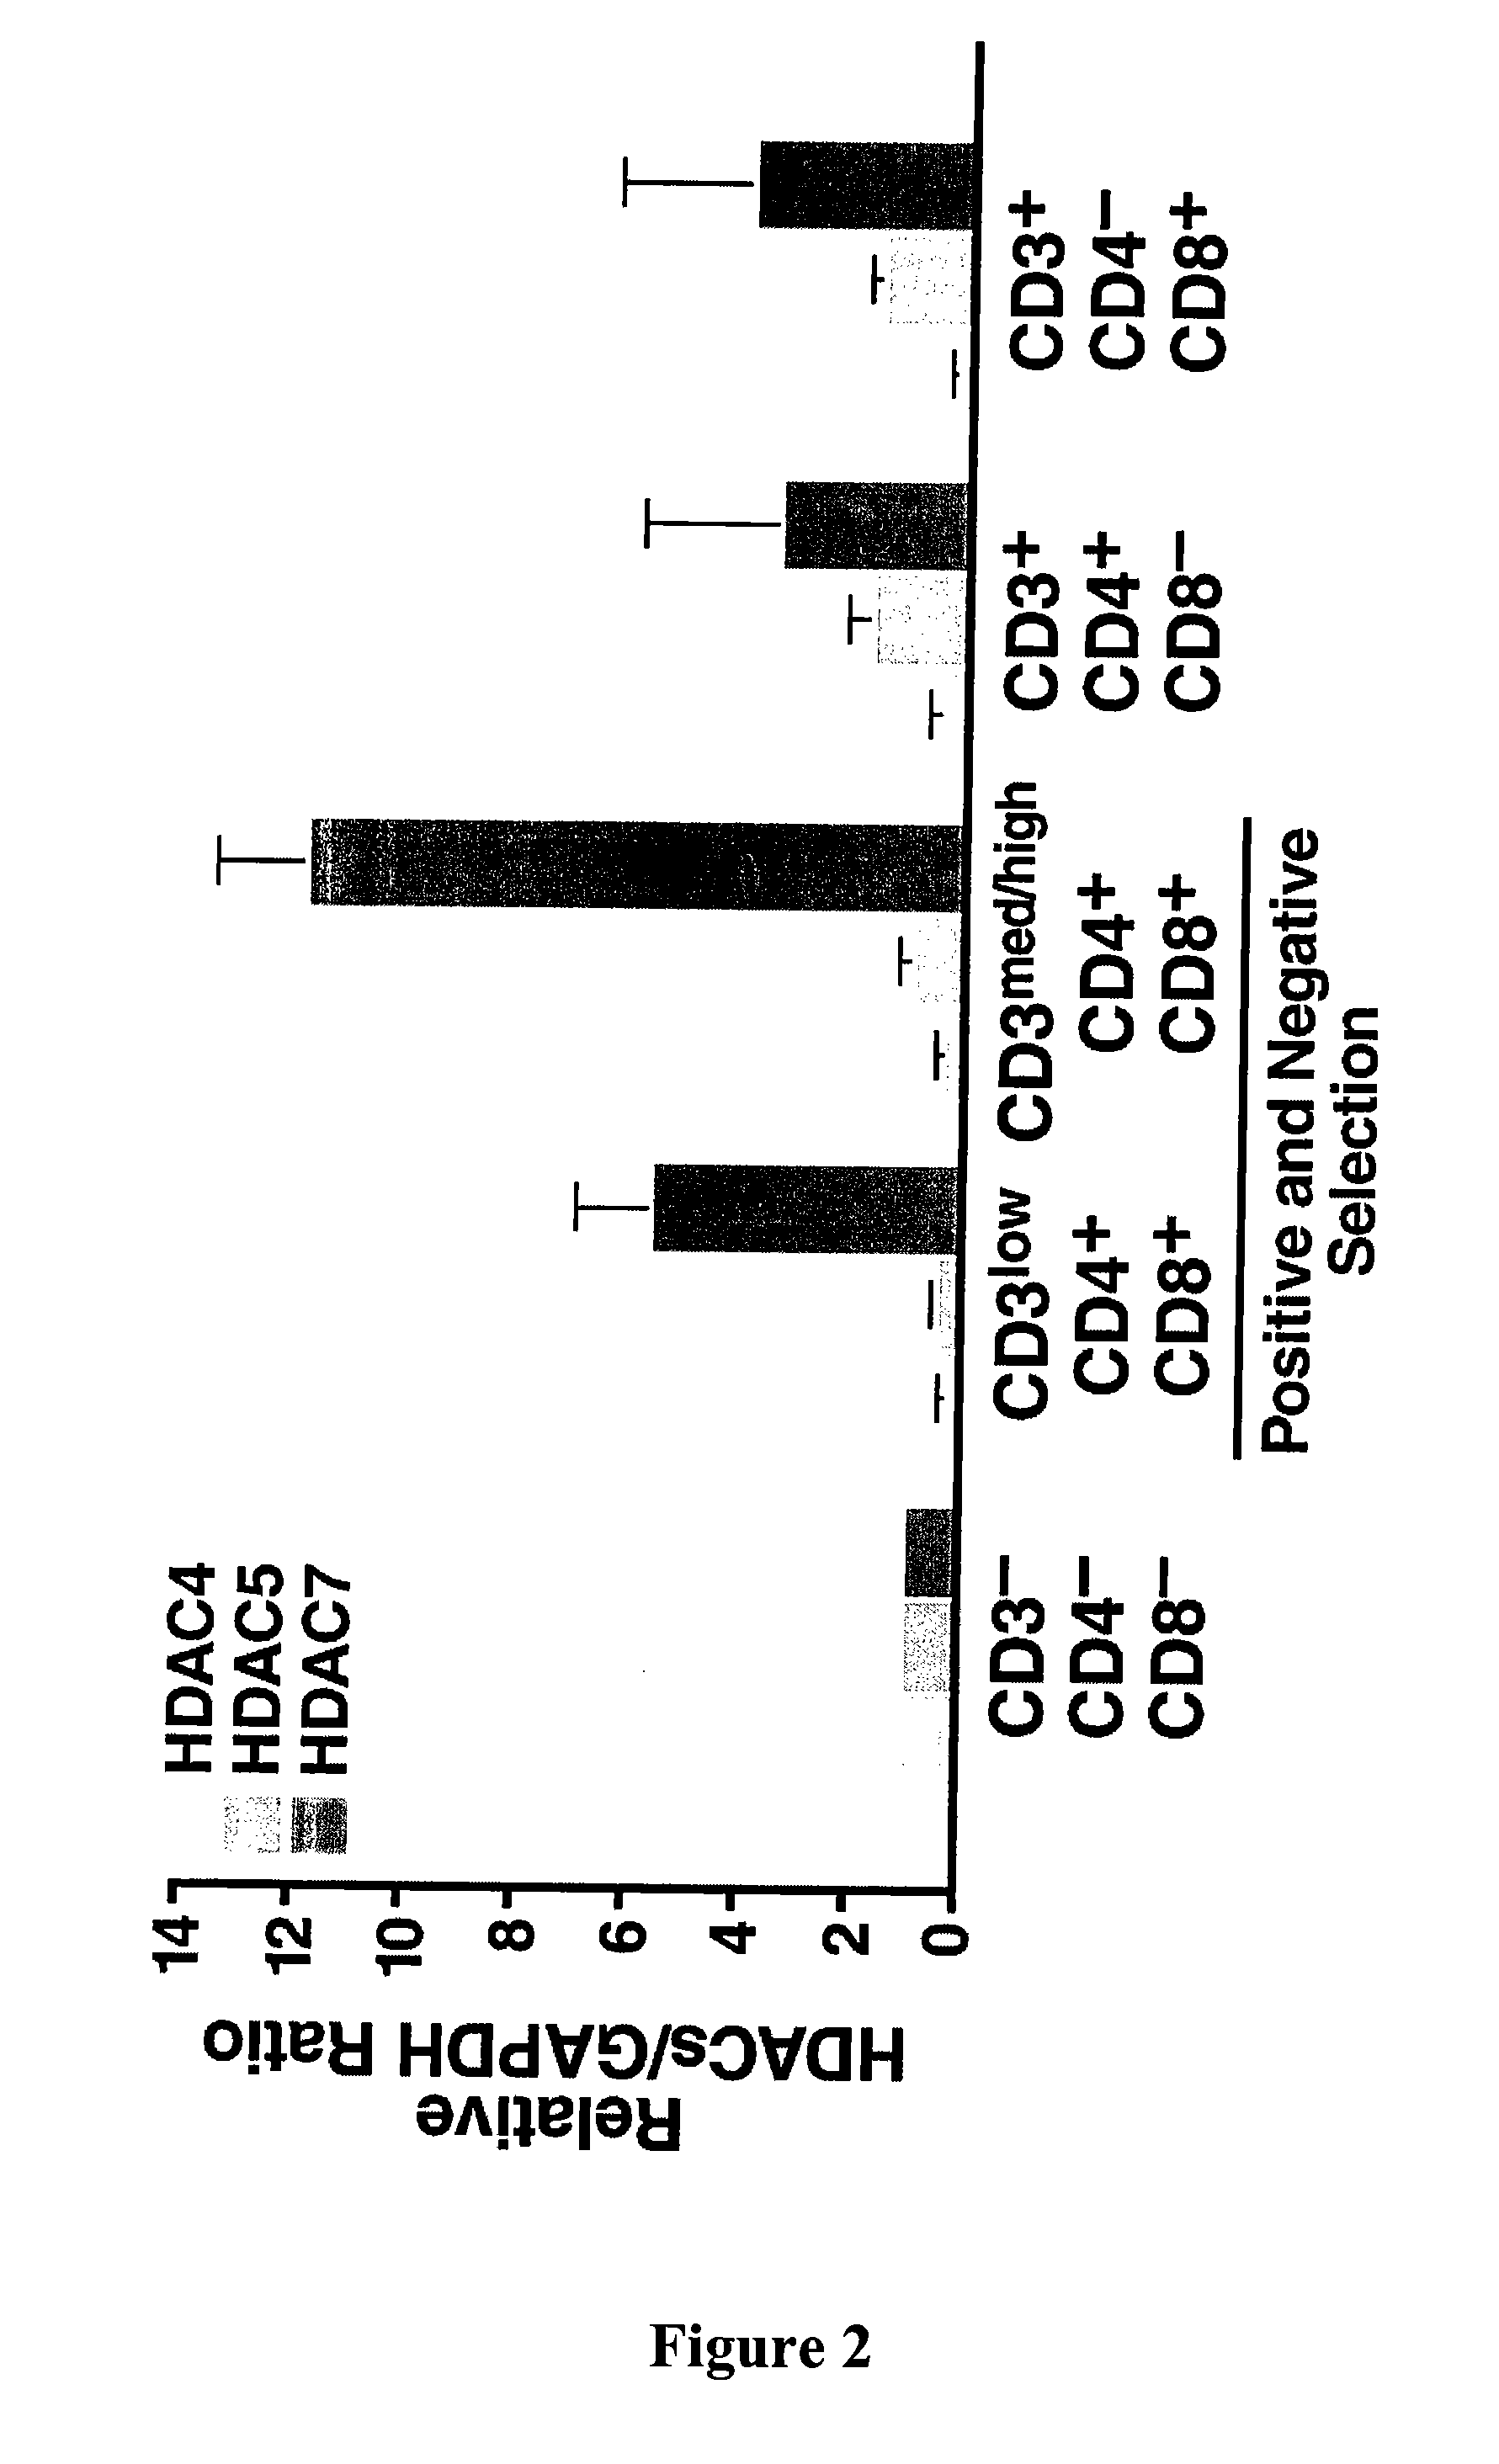 Dephosphorylation of HDAC7 By Myosin Phosphatase